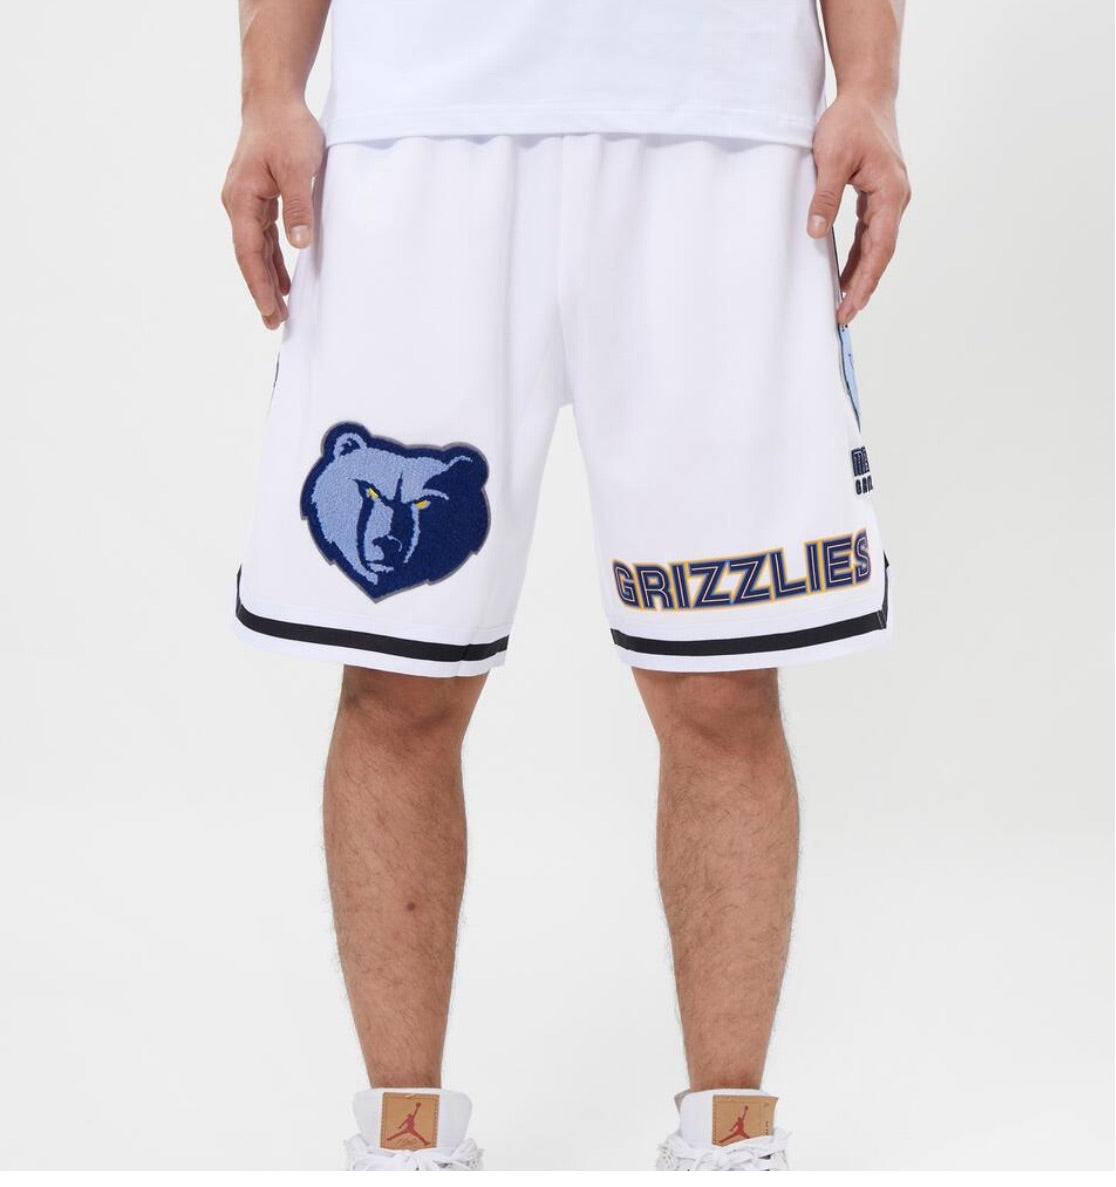 grizzlies shorts white